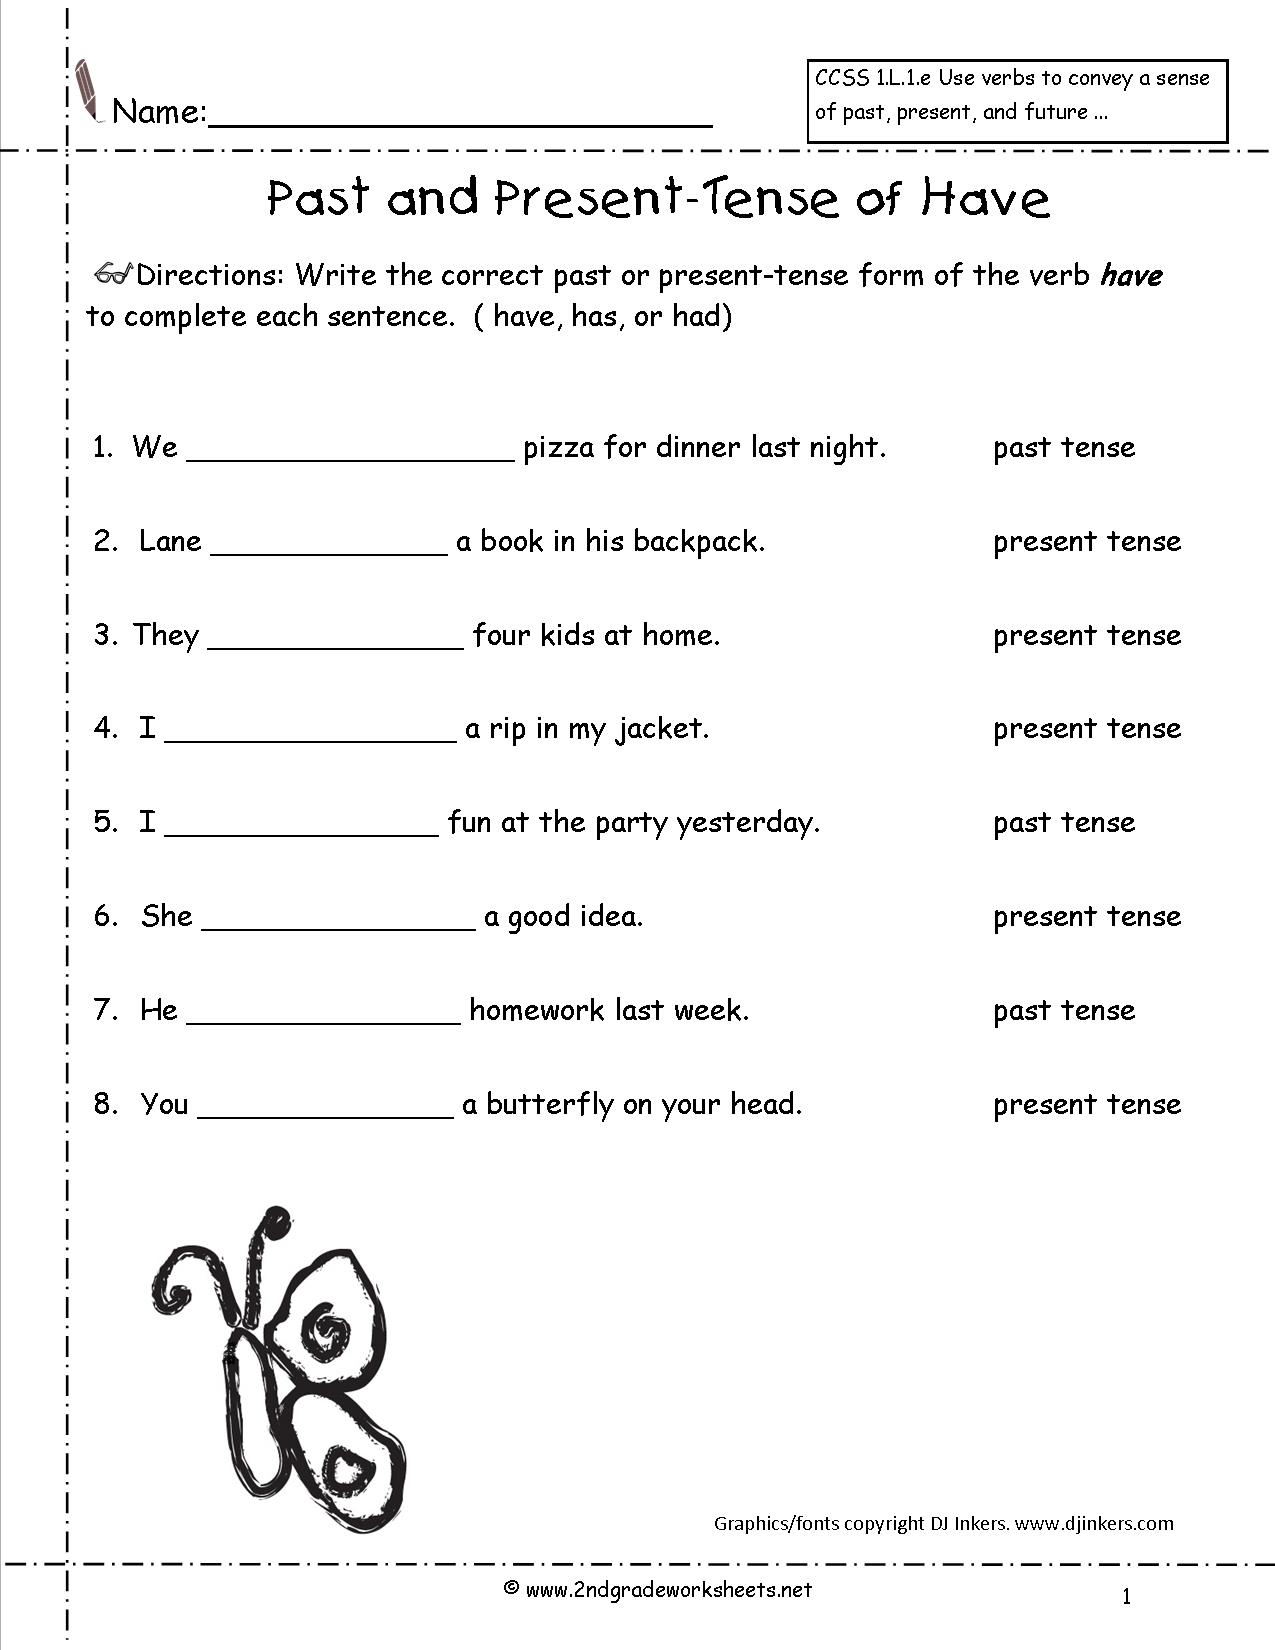 Grade 4 Regular Verbs Worksheet